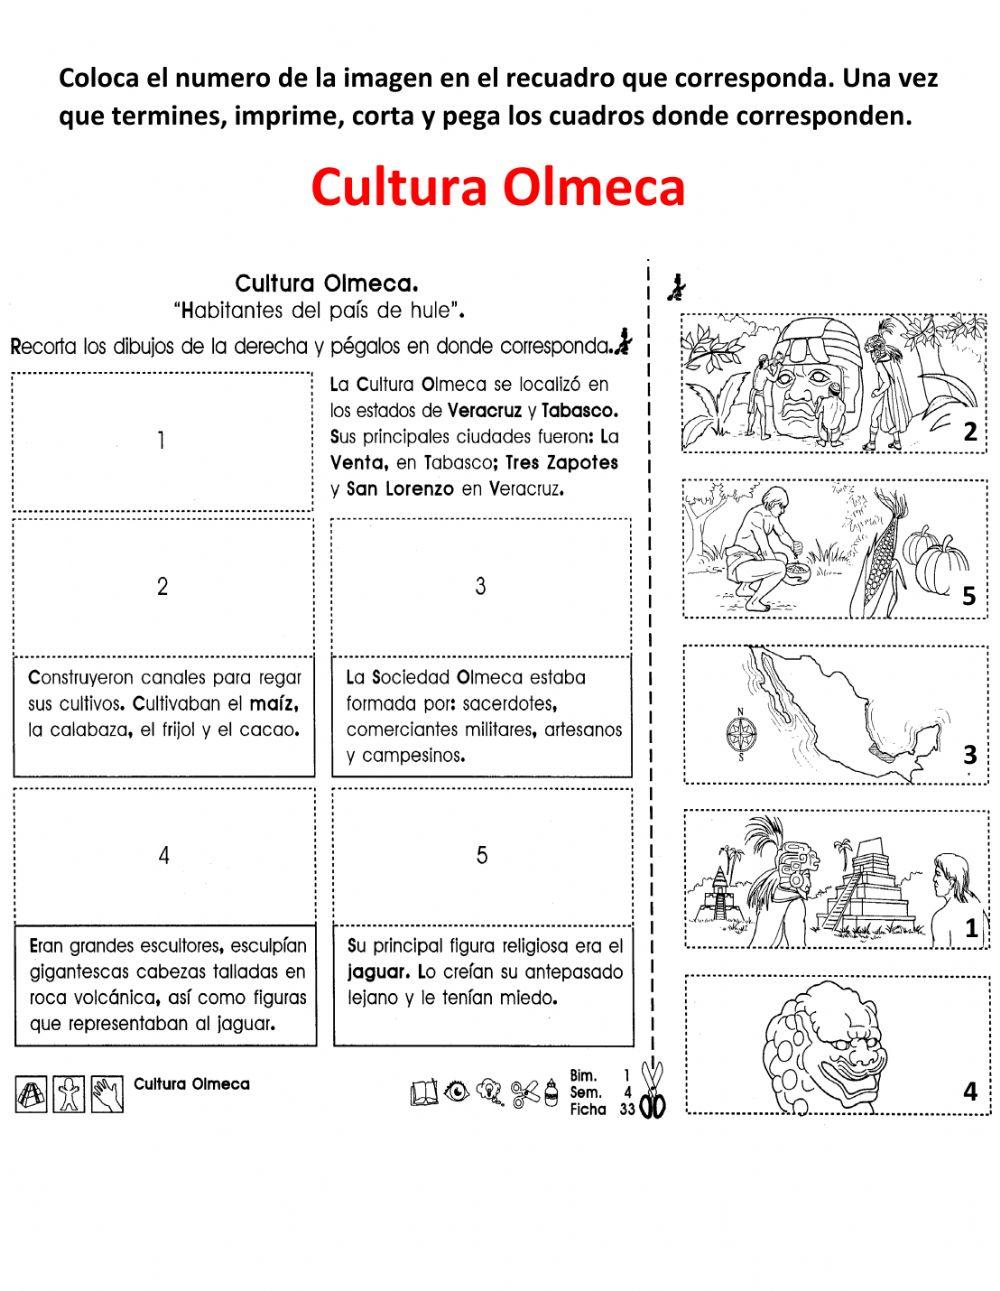 Culturas Olmeca, Maya y Teptihuacana